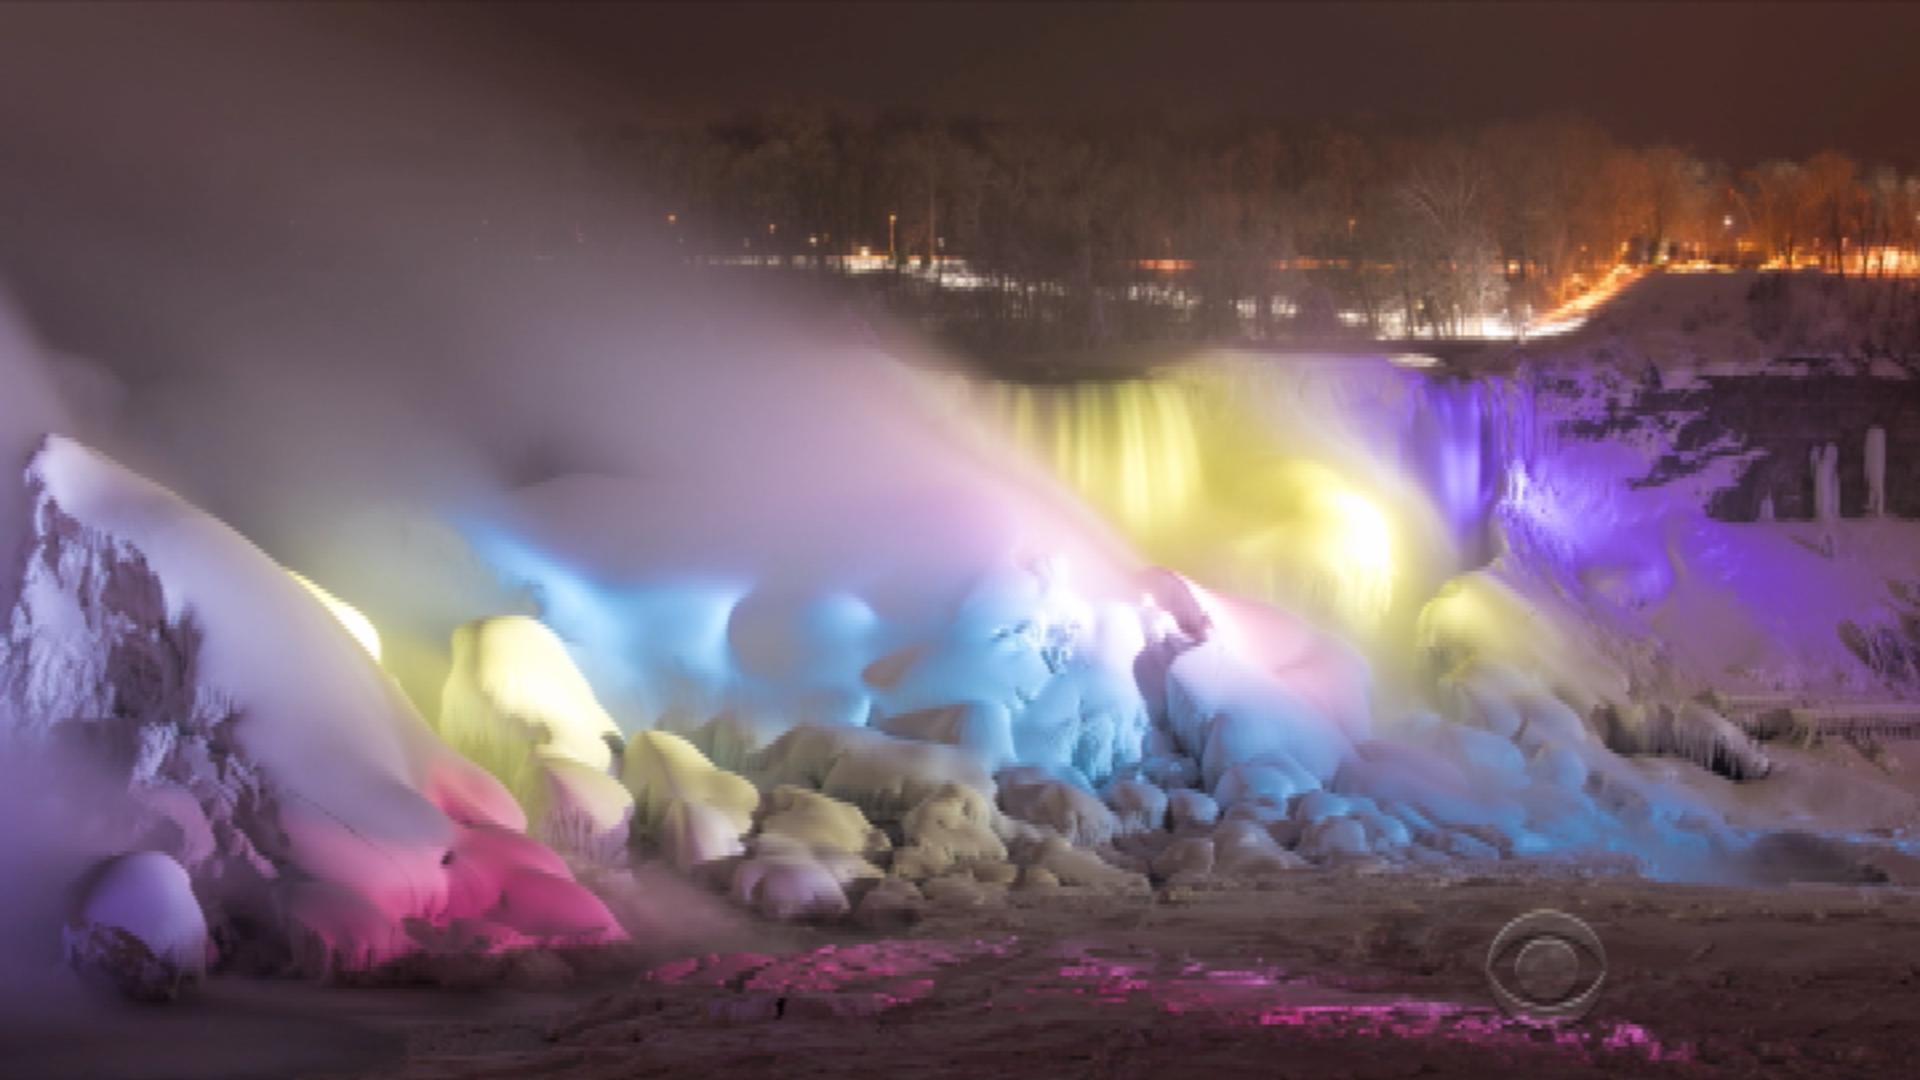 Niagara Falls unveils new LED lighting system - CBS News